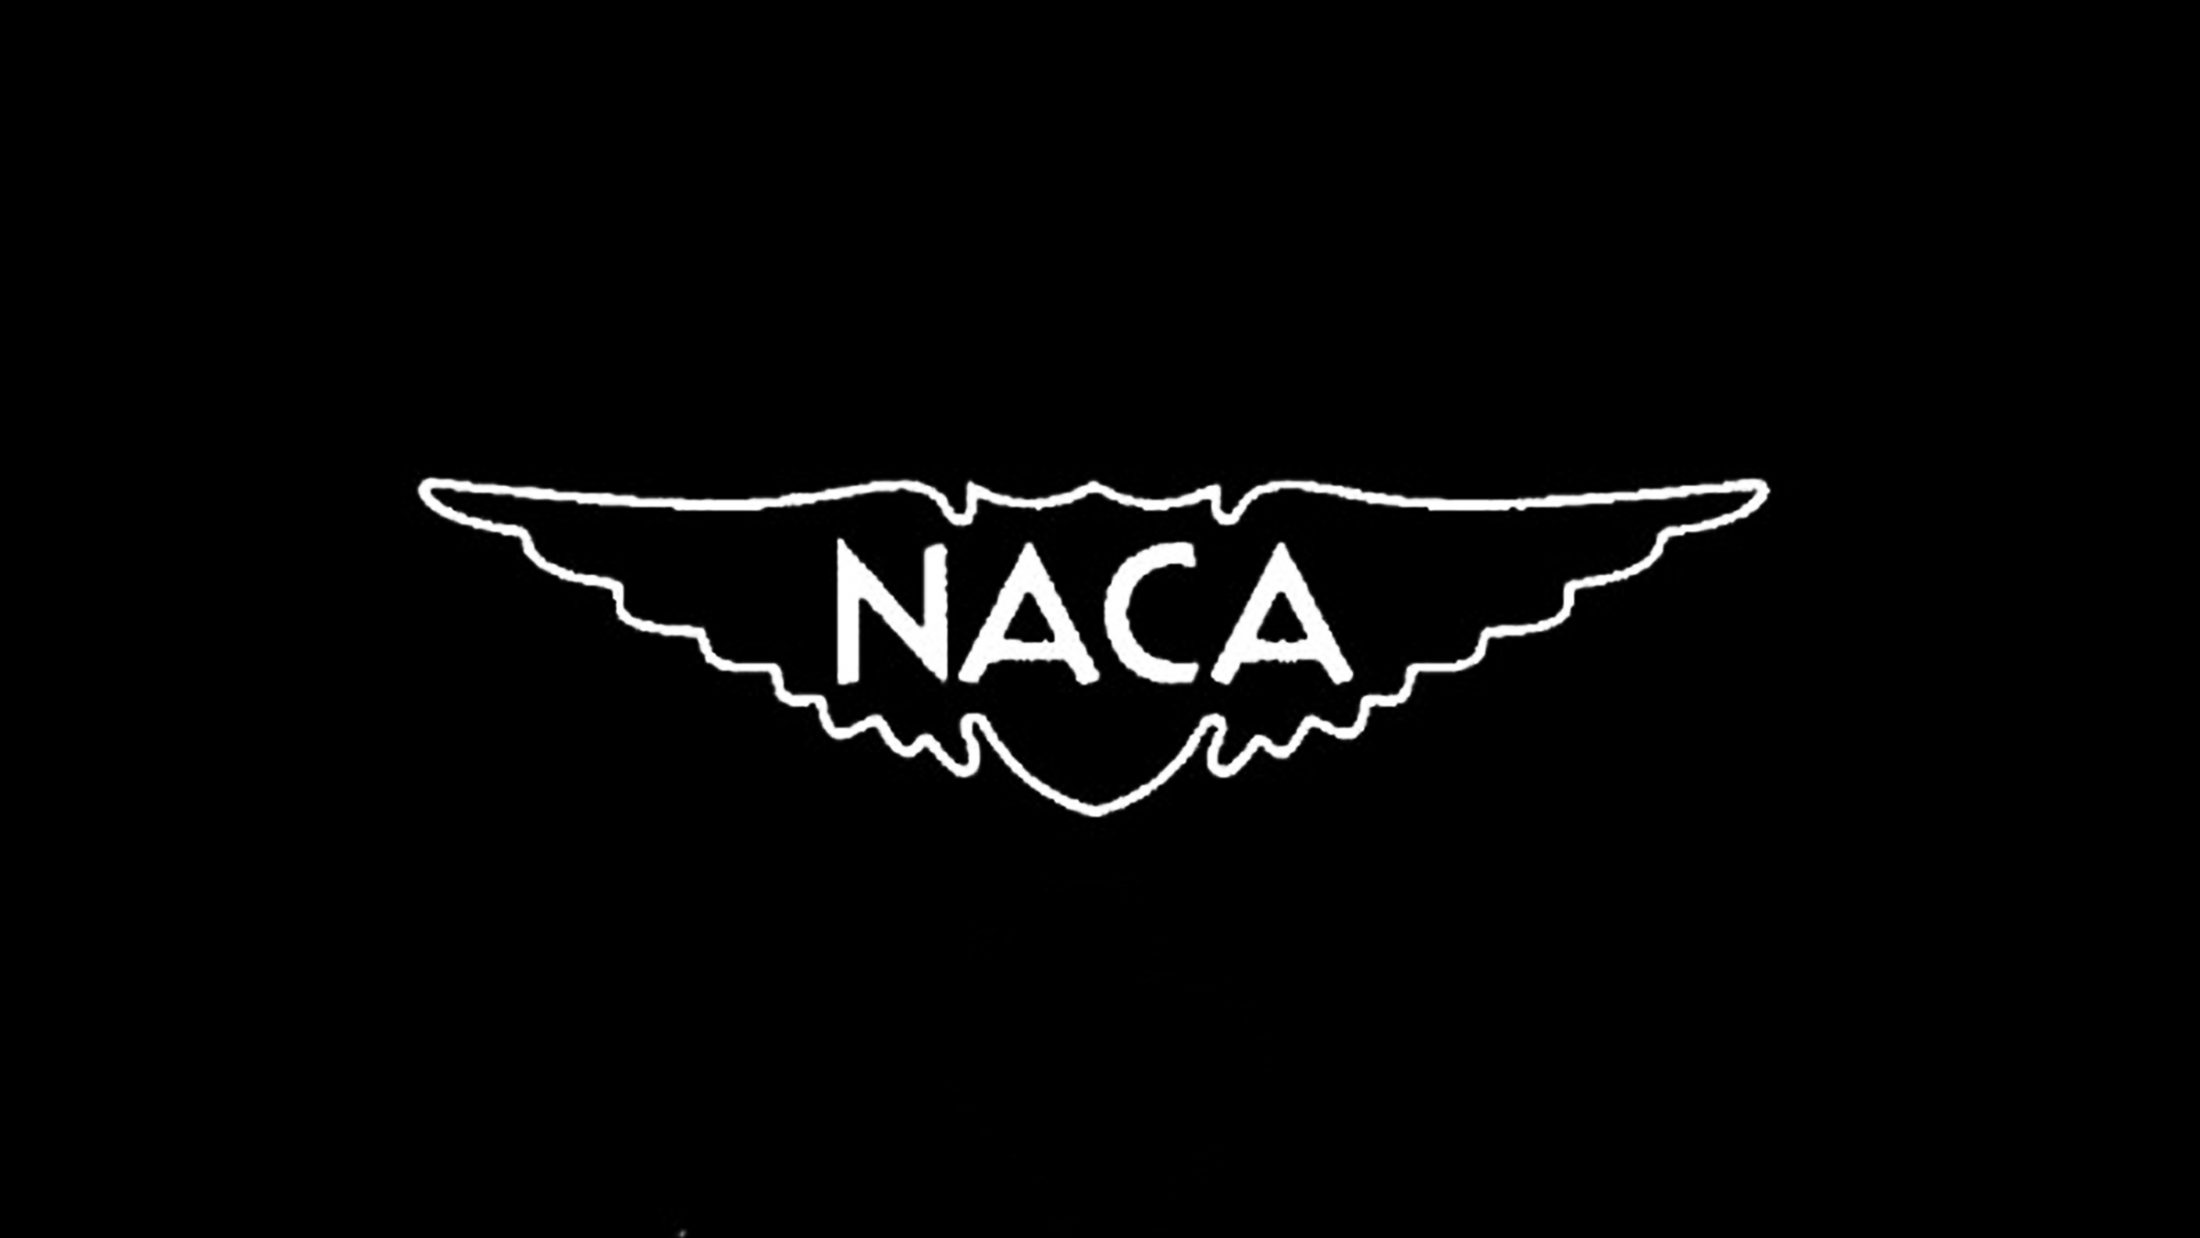 National Advisory Committee for Aeronautics (NACA) logo enhanced and inverted